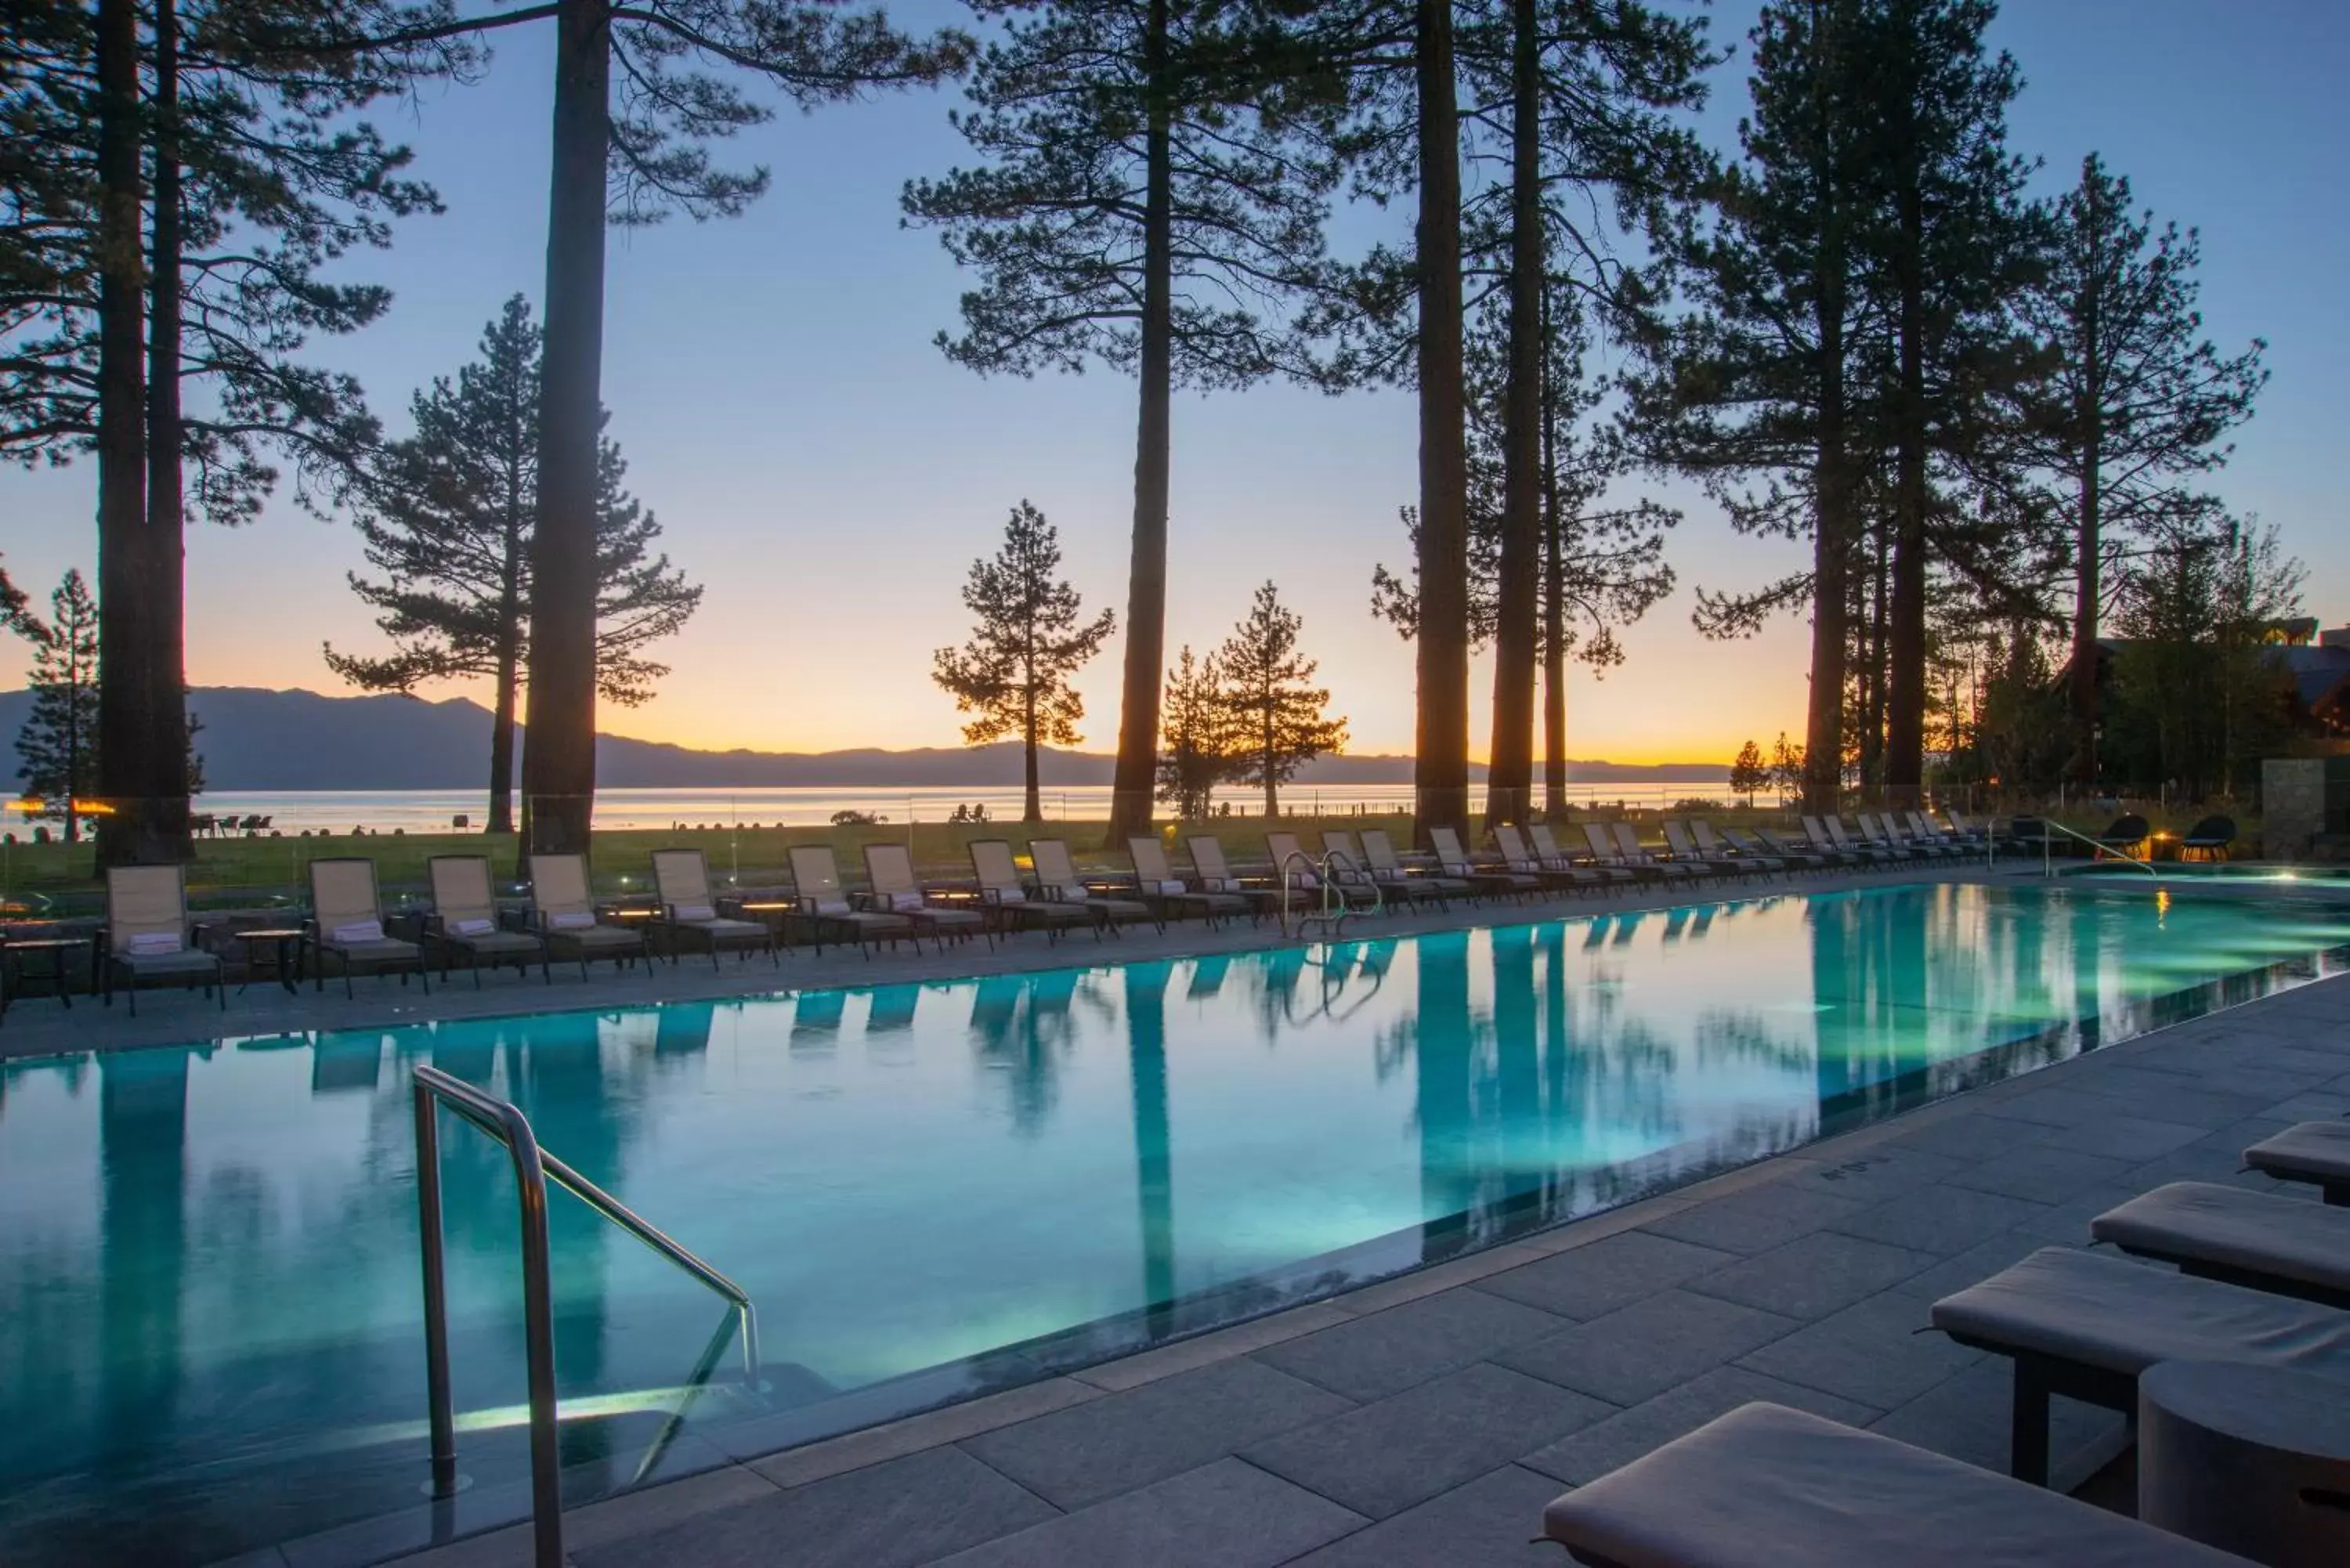 Swimming Pool in Edgewood Tahoe Resort